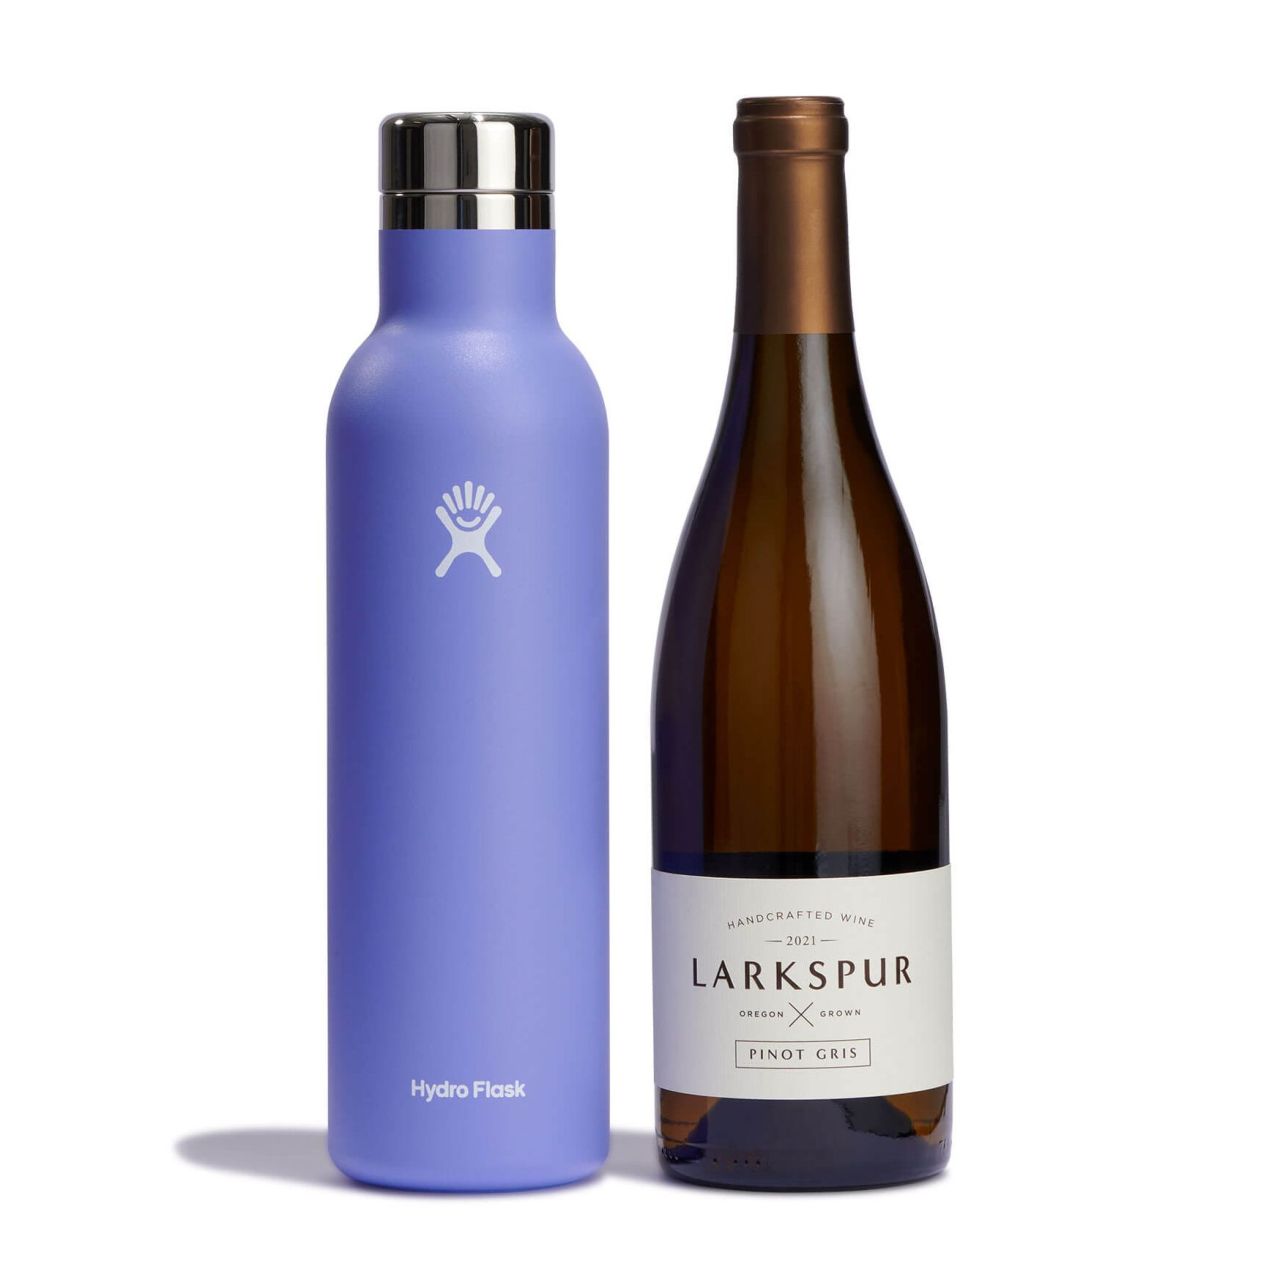 Hydro Flask 25oz Ceramic Wine Bottle